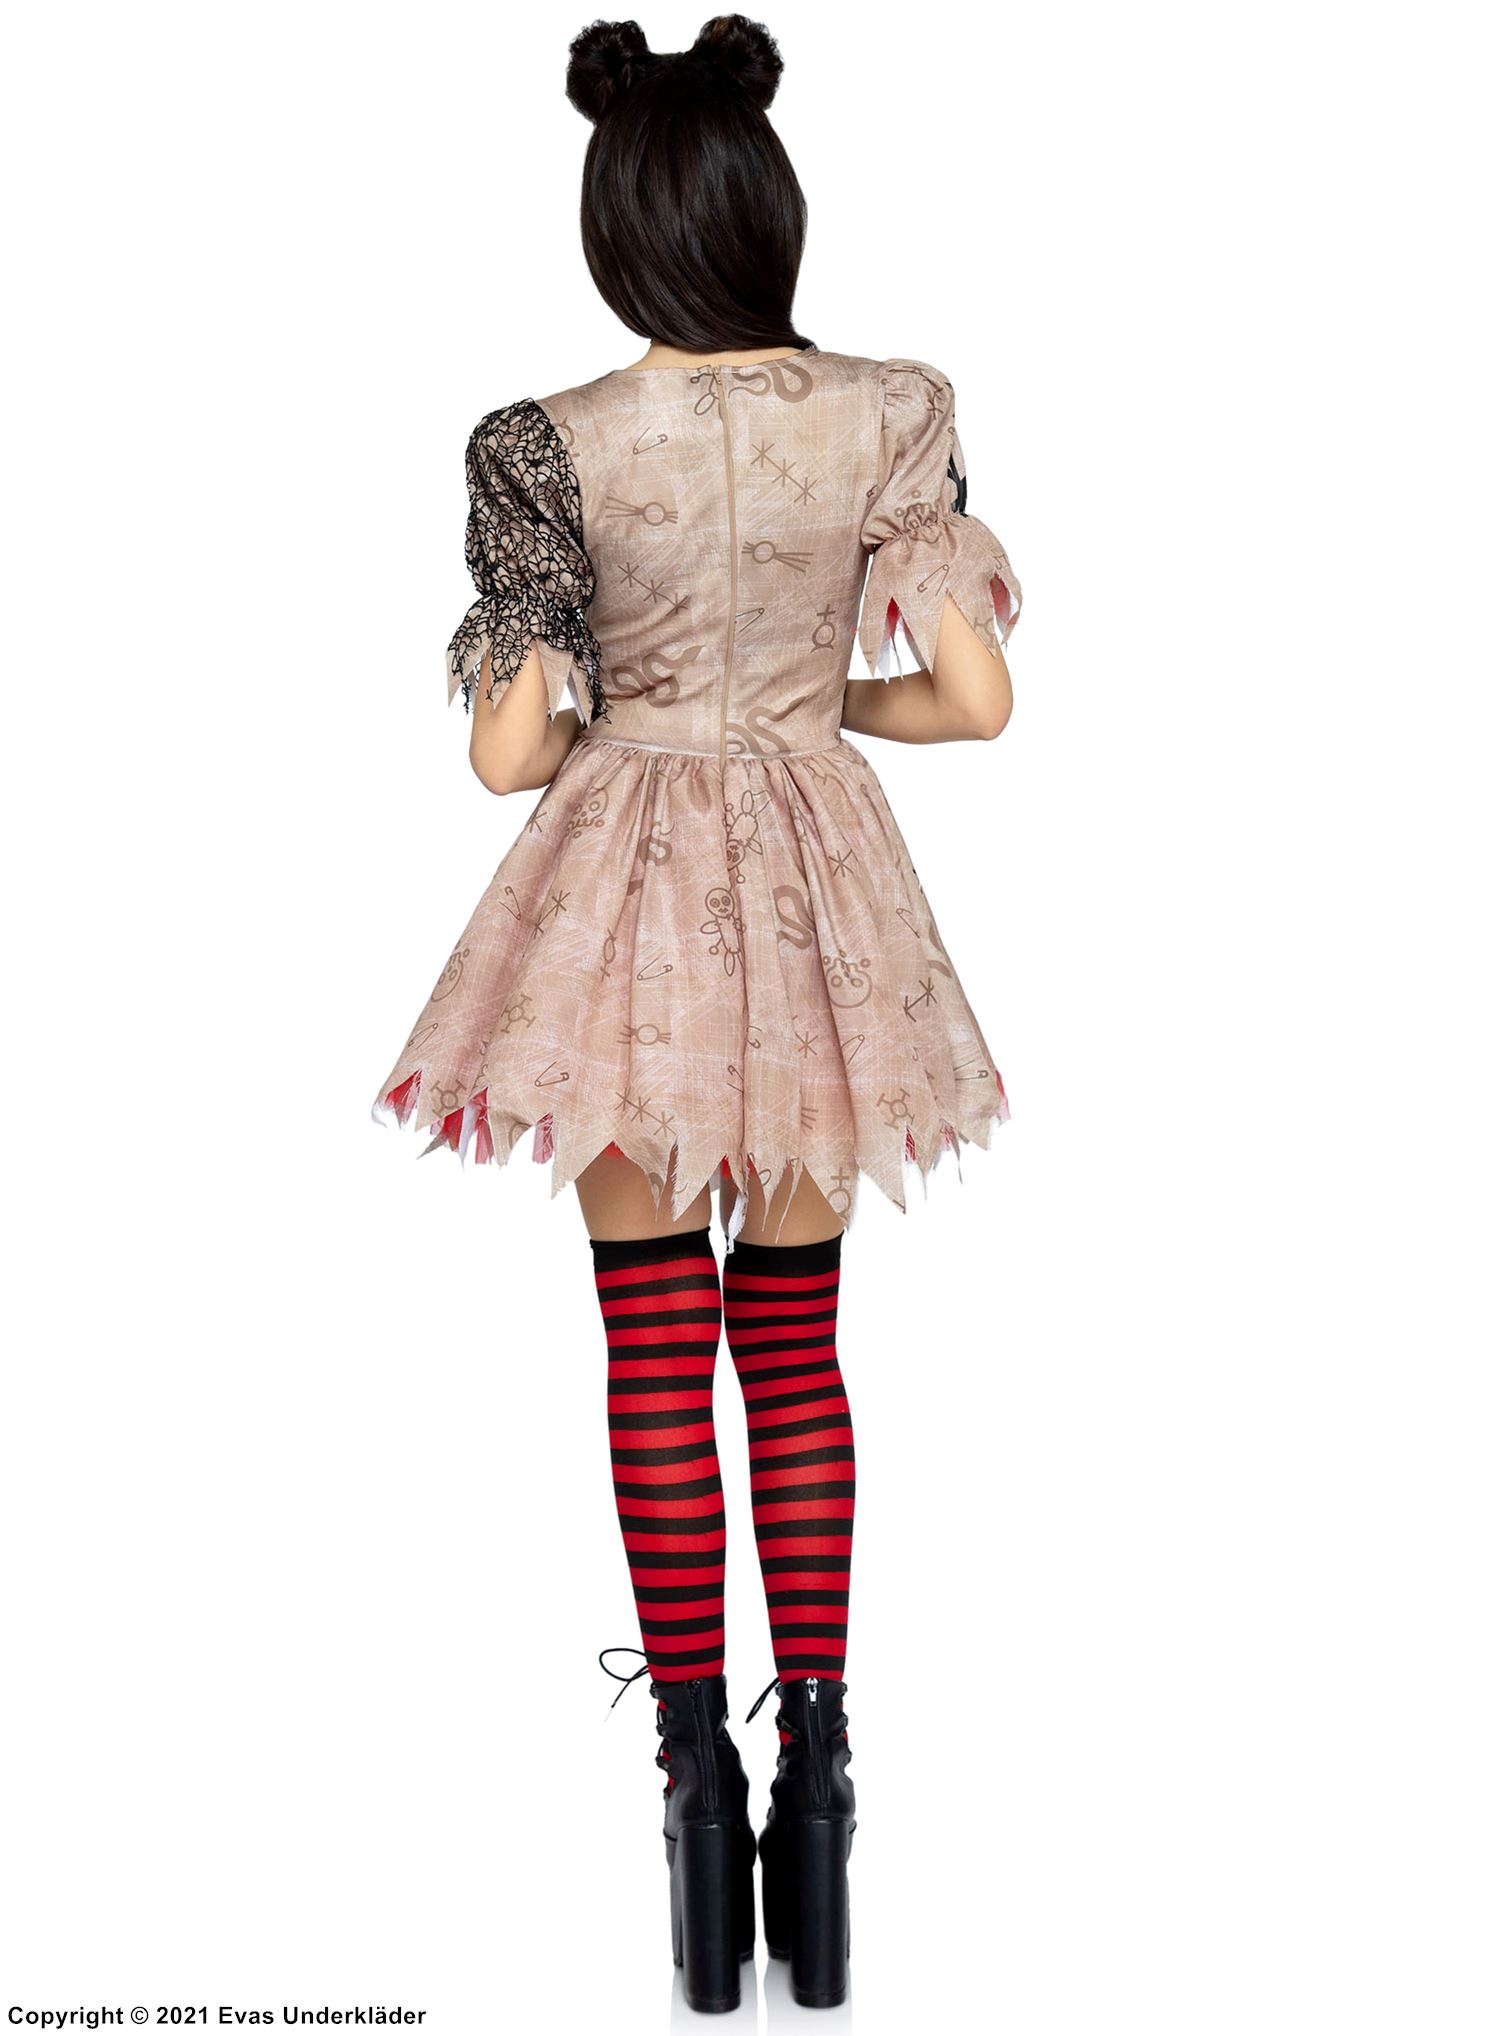 Voodoo doll, costume dress, tatters, stitches